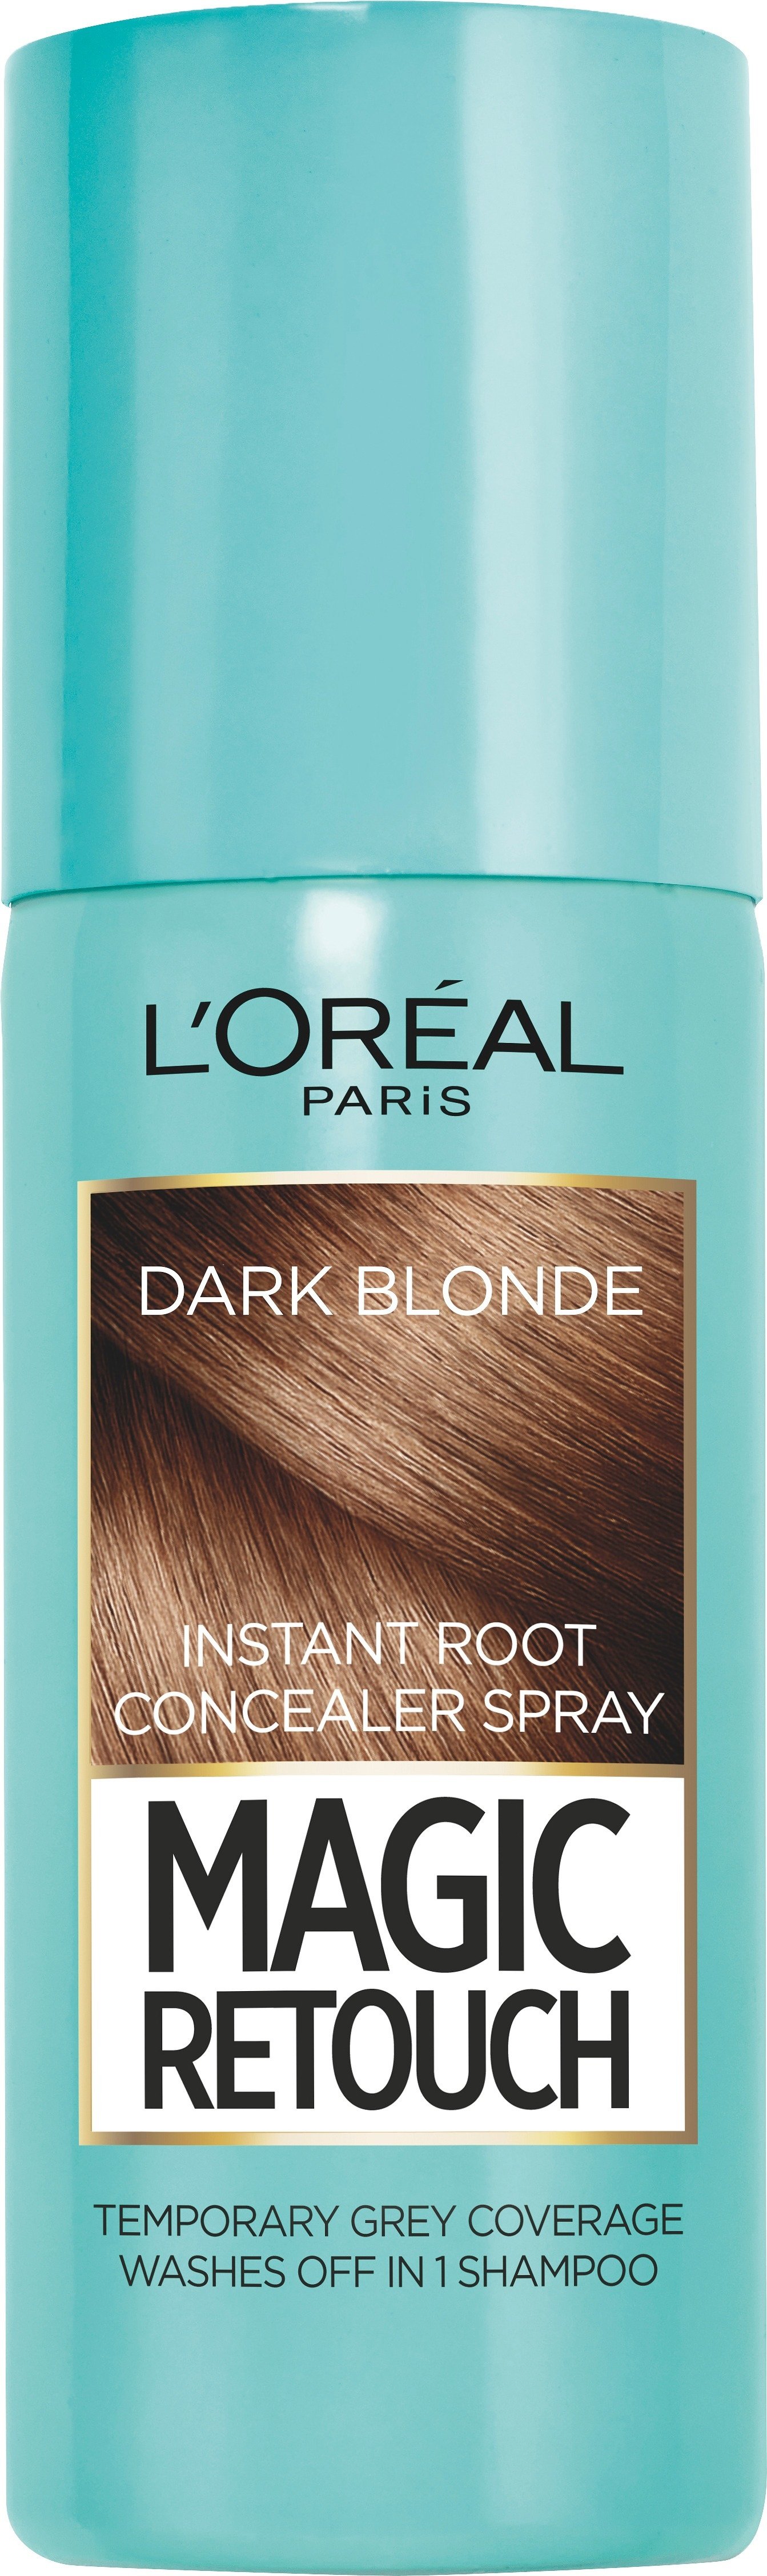 L'Oréal Paris Magic Retouch Concealer Spray Dark Blonde 75 ml